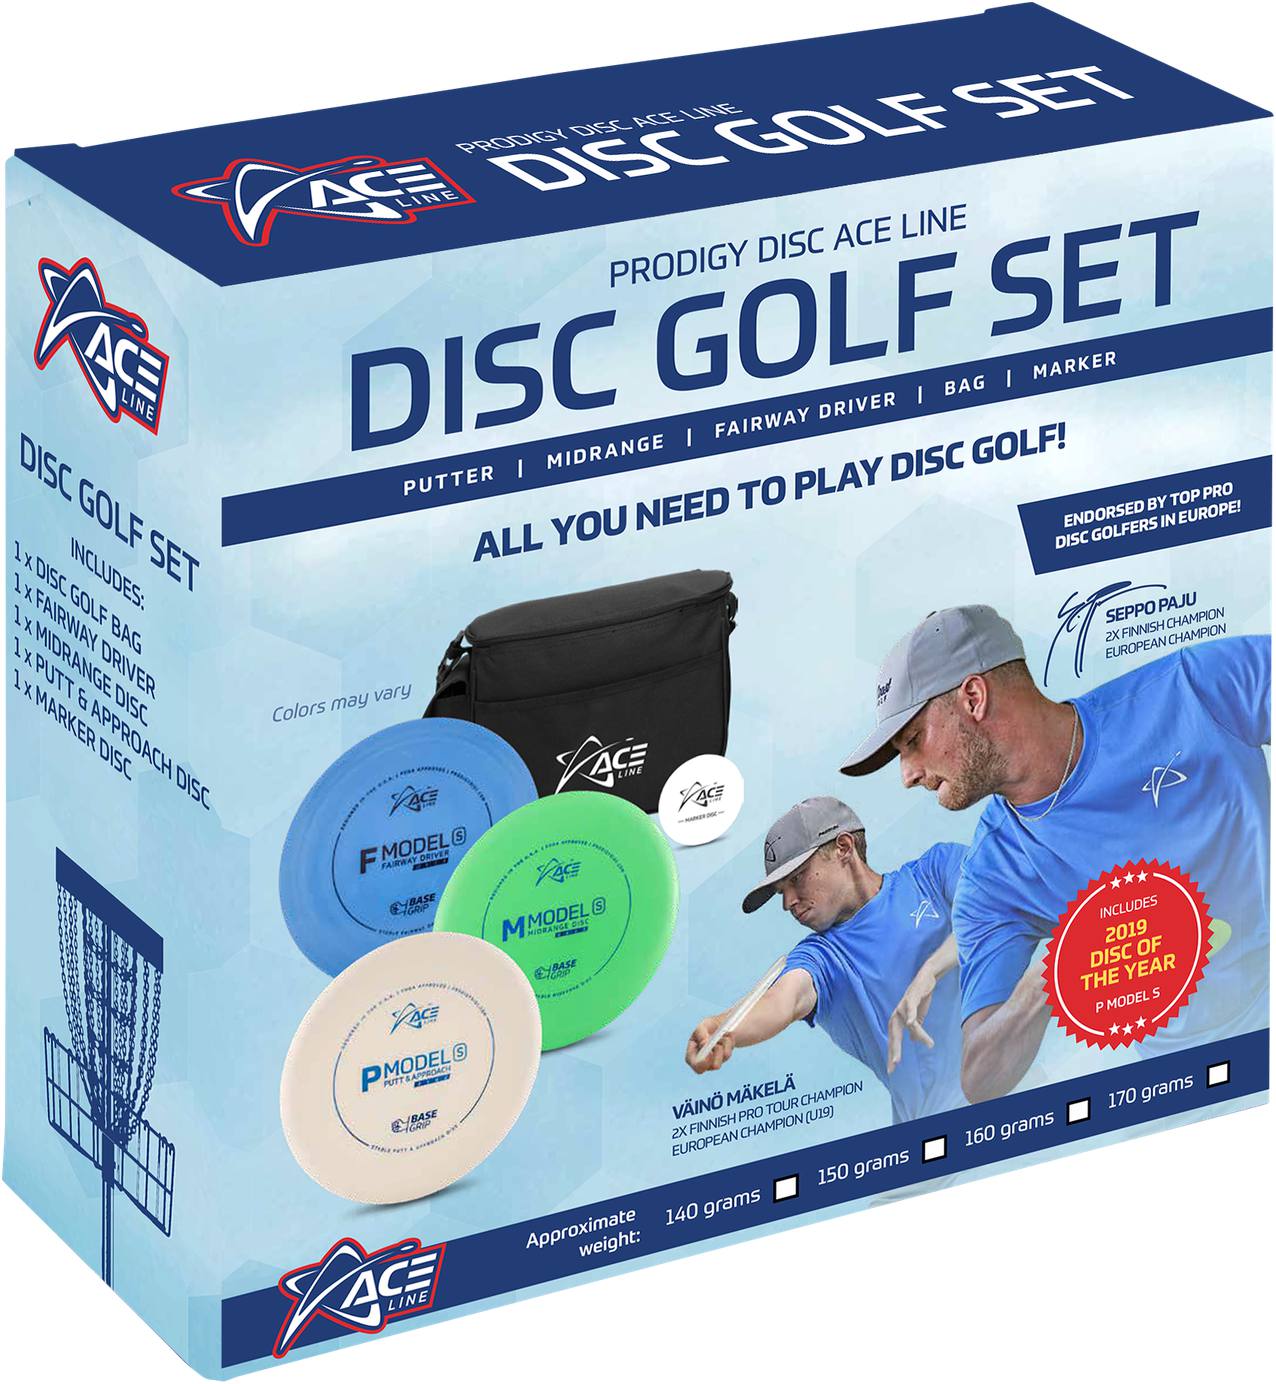 Prodigy Disc Ace Golf 3-set + Bag